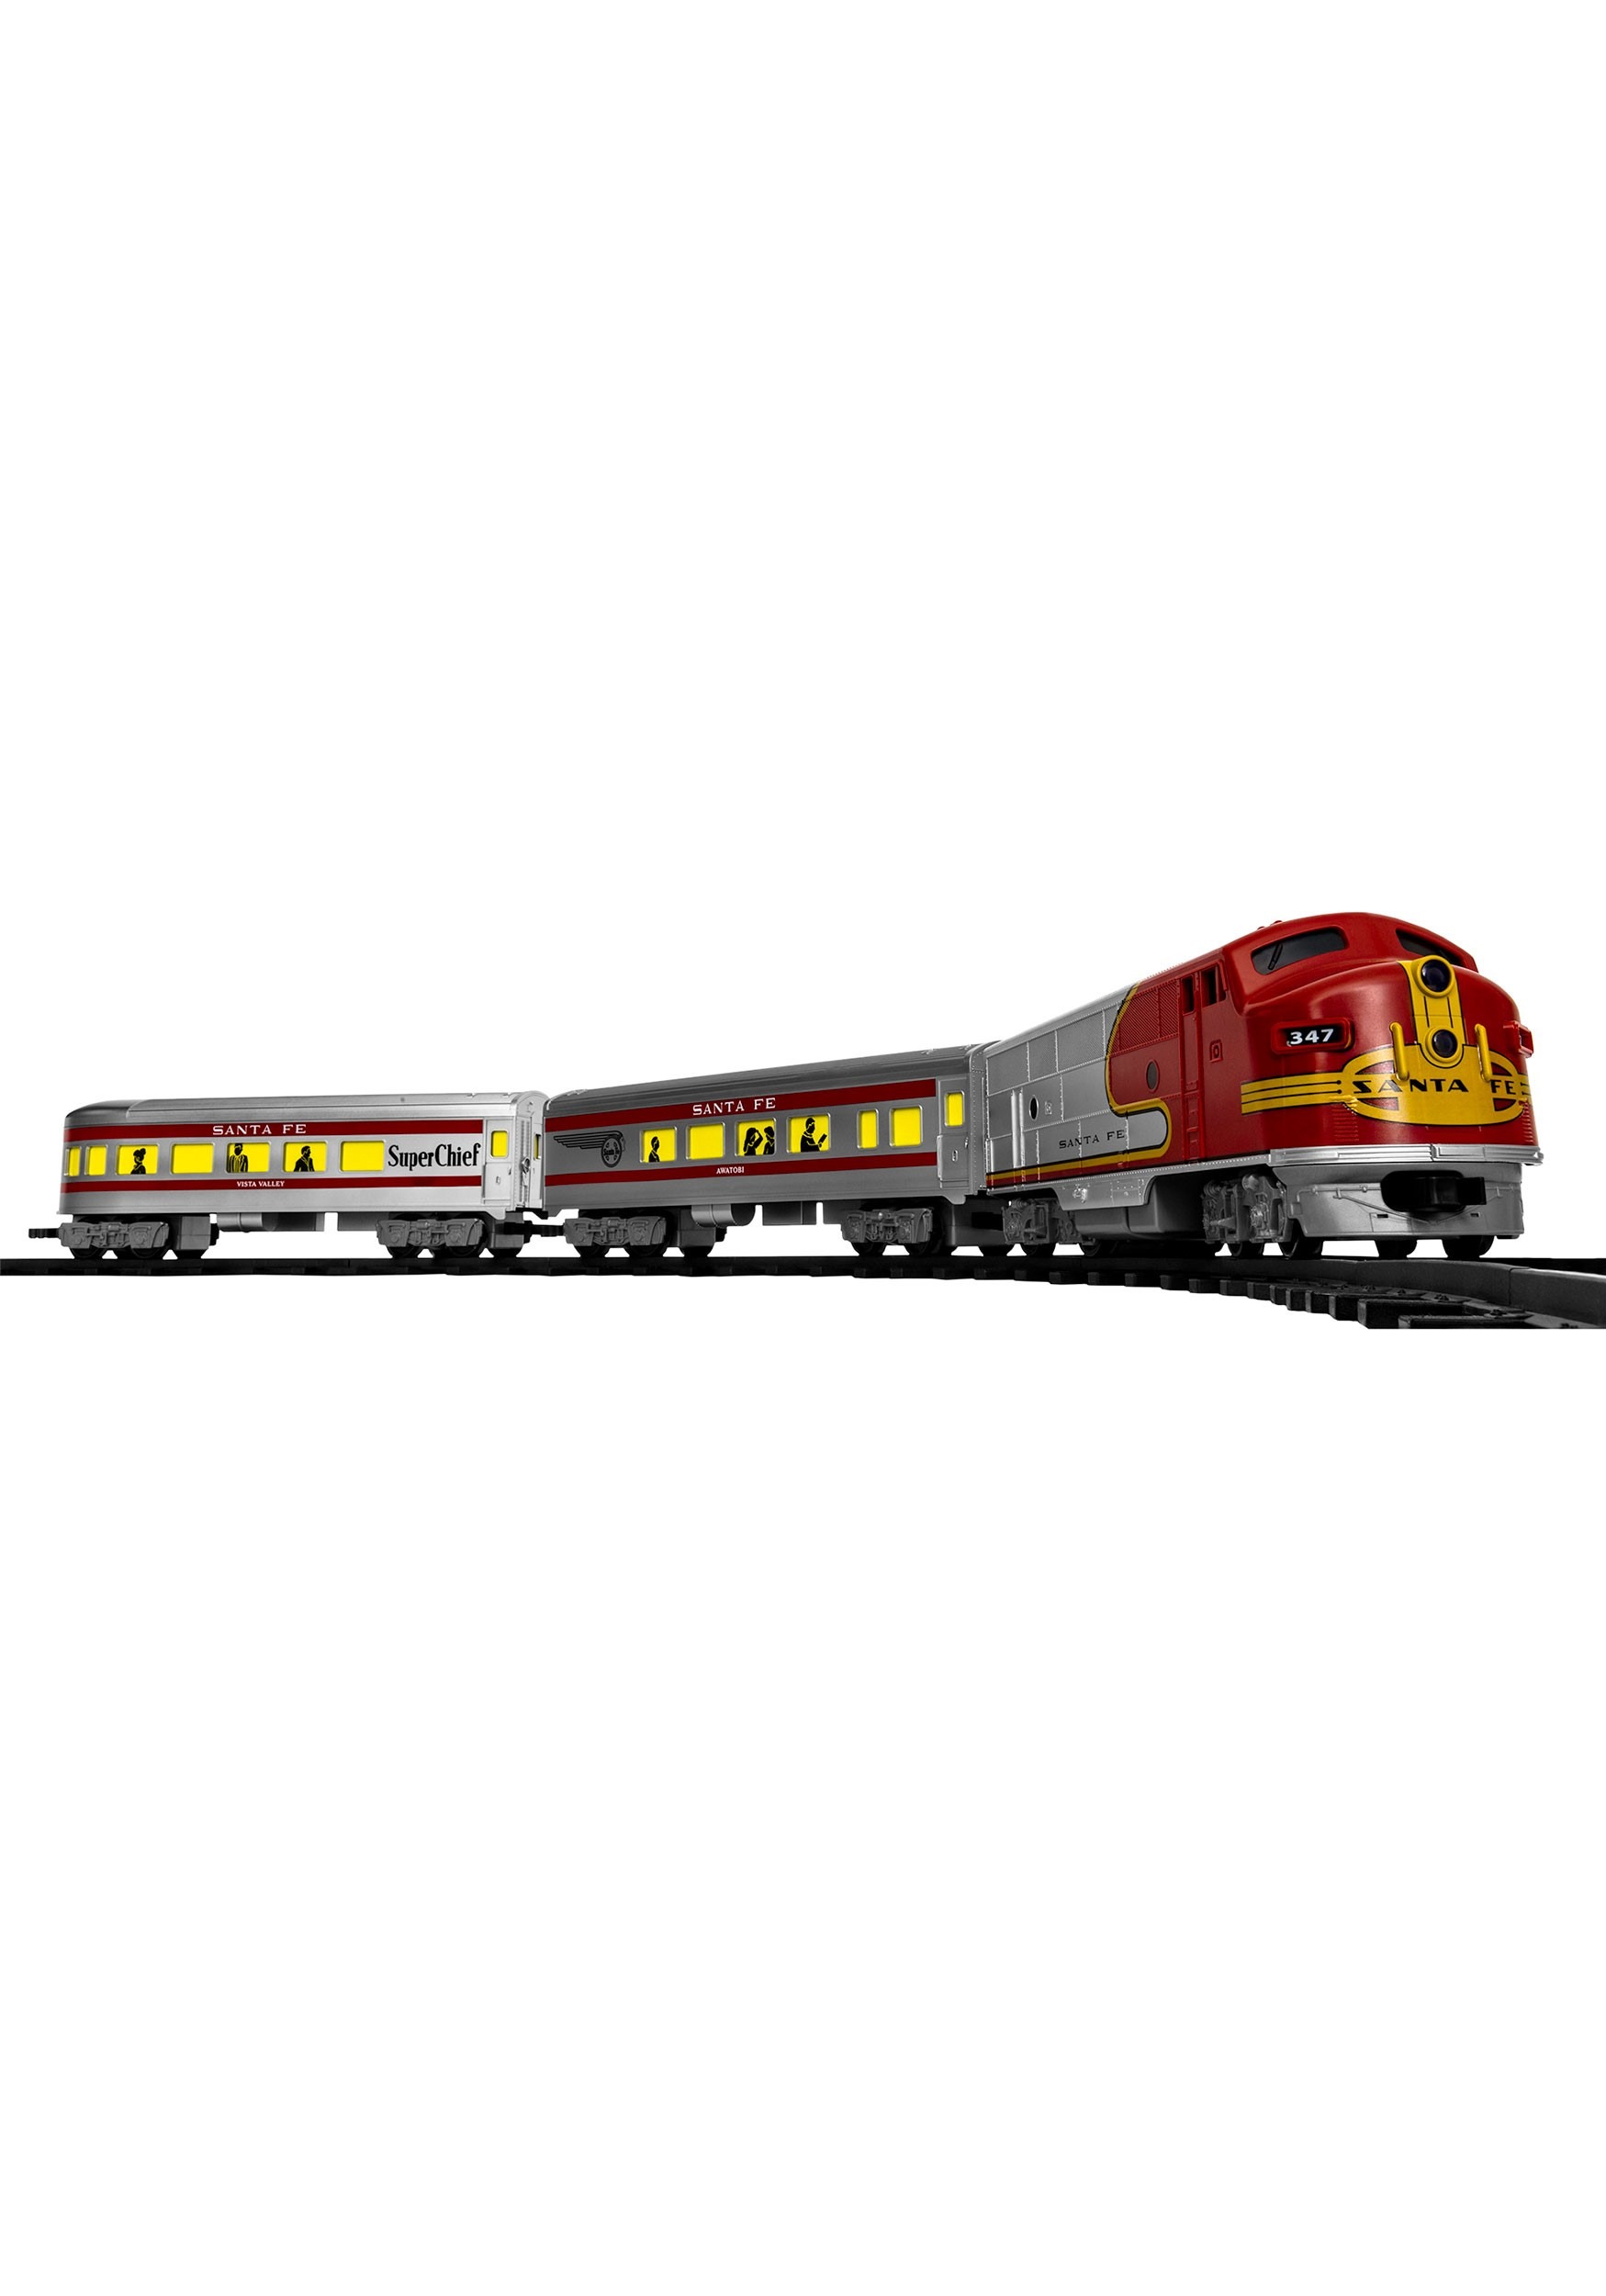 Lionel Santa Fe Diesel Passenger Ready-to-Play Train Set